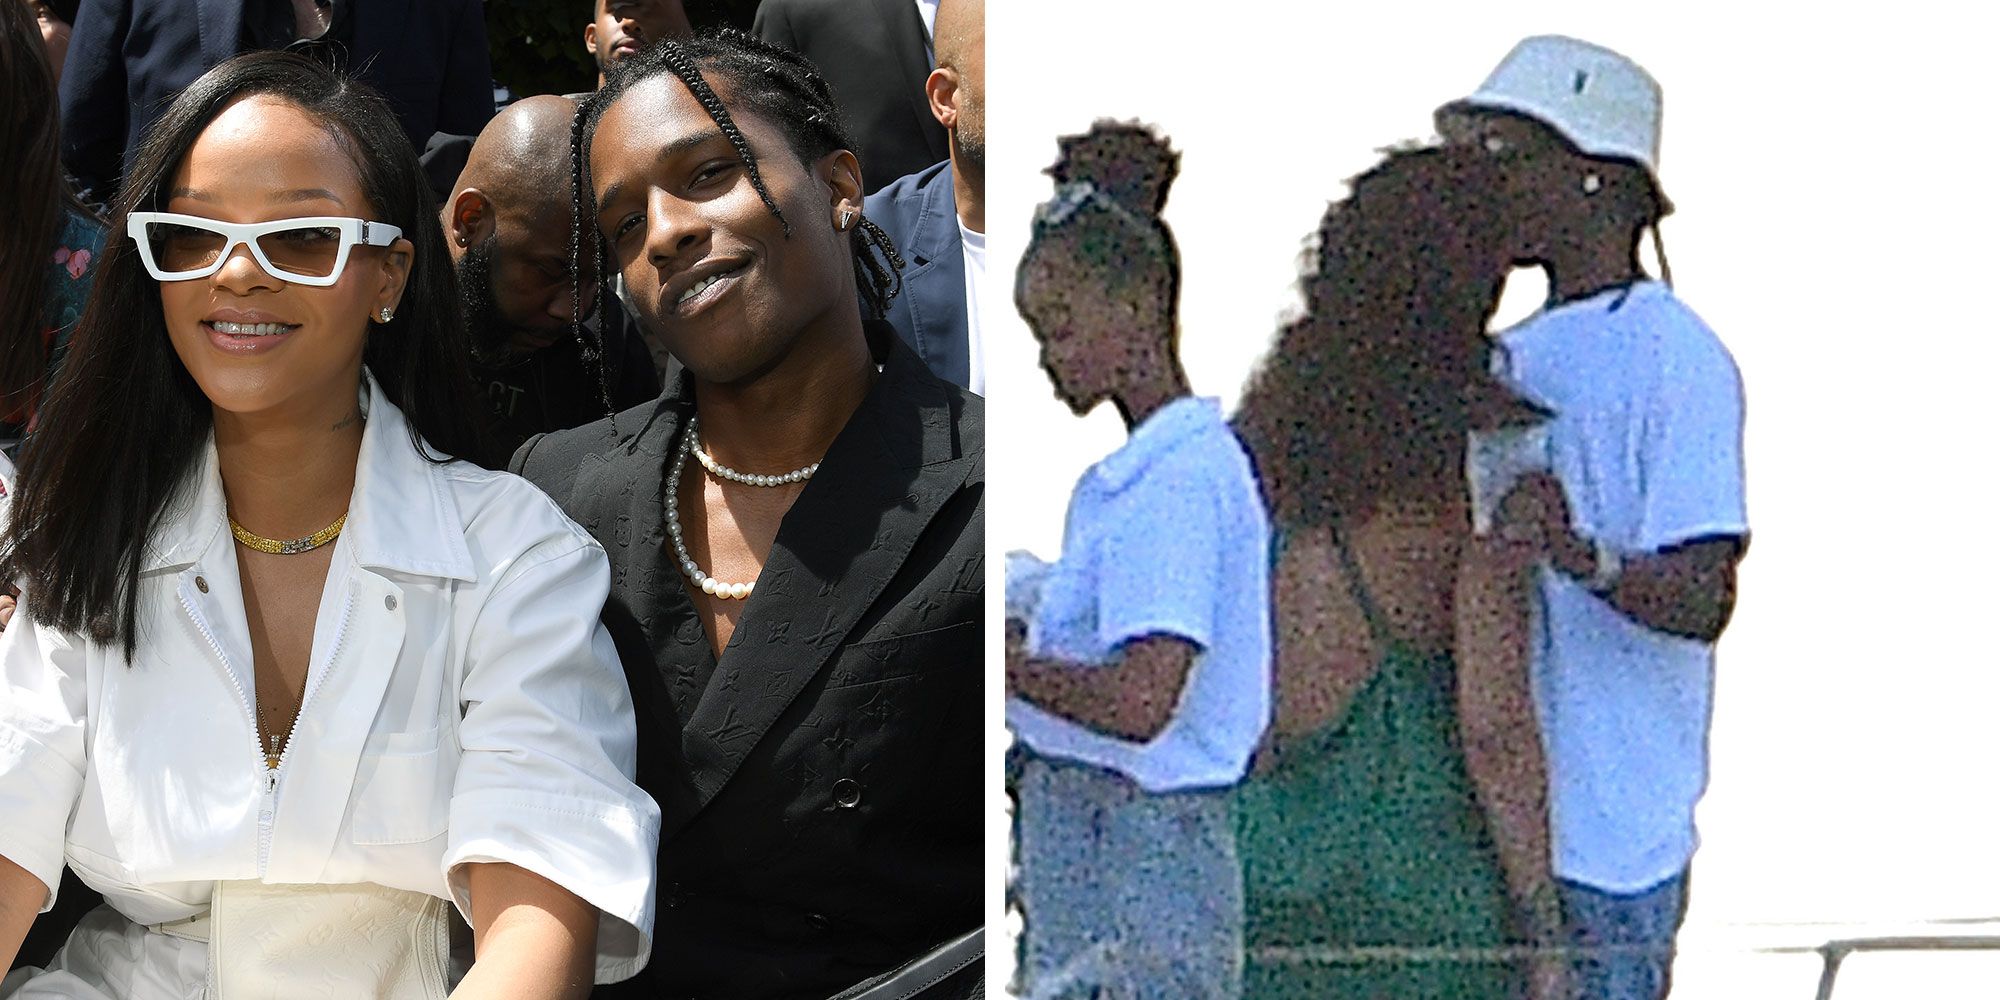 Rihanna and A$AP Rocky Kissing Photos Confirm Their Relationship